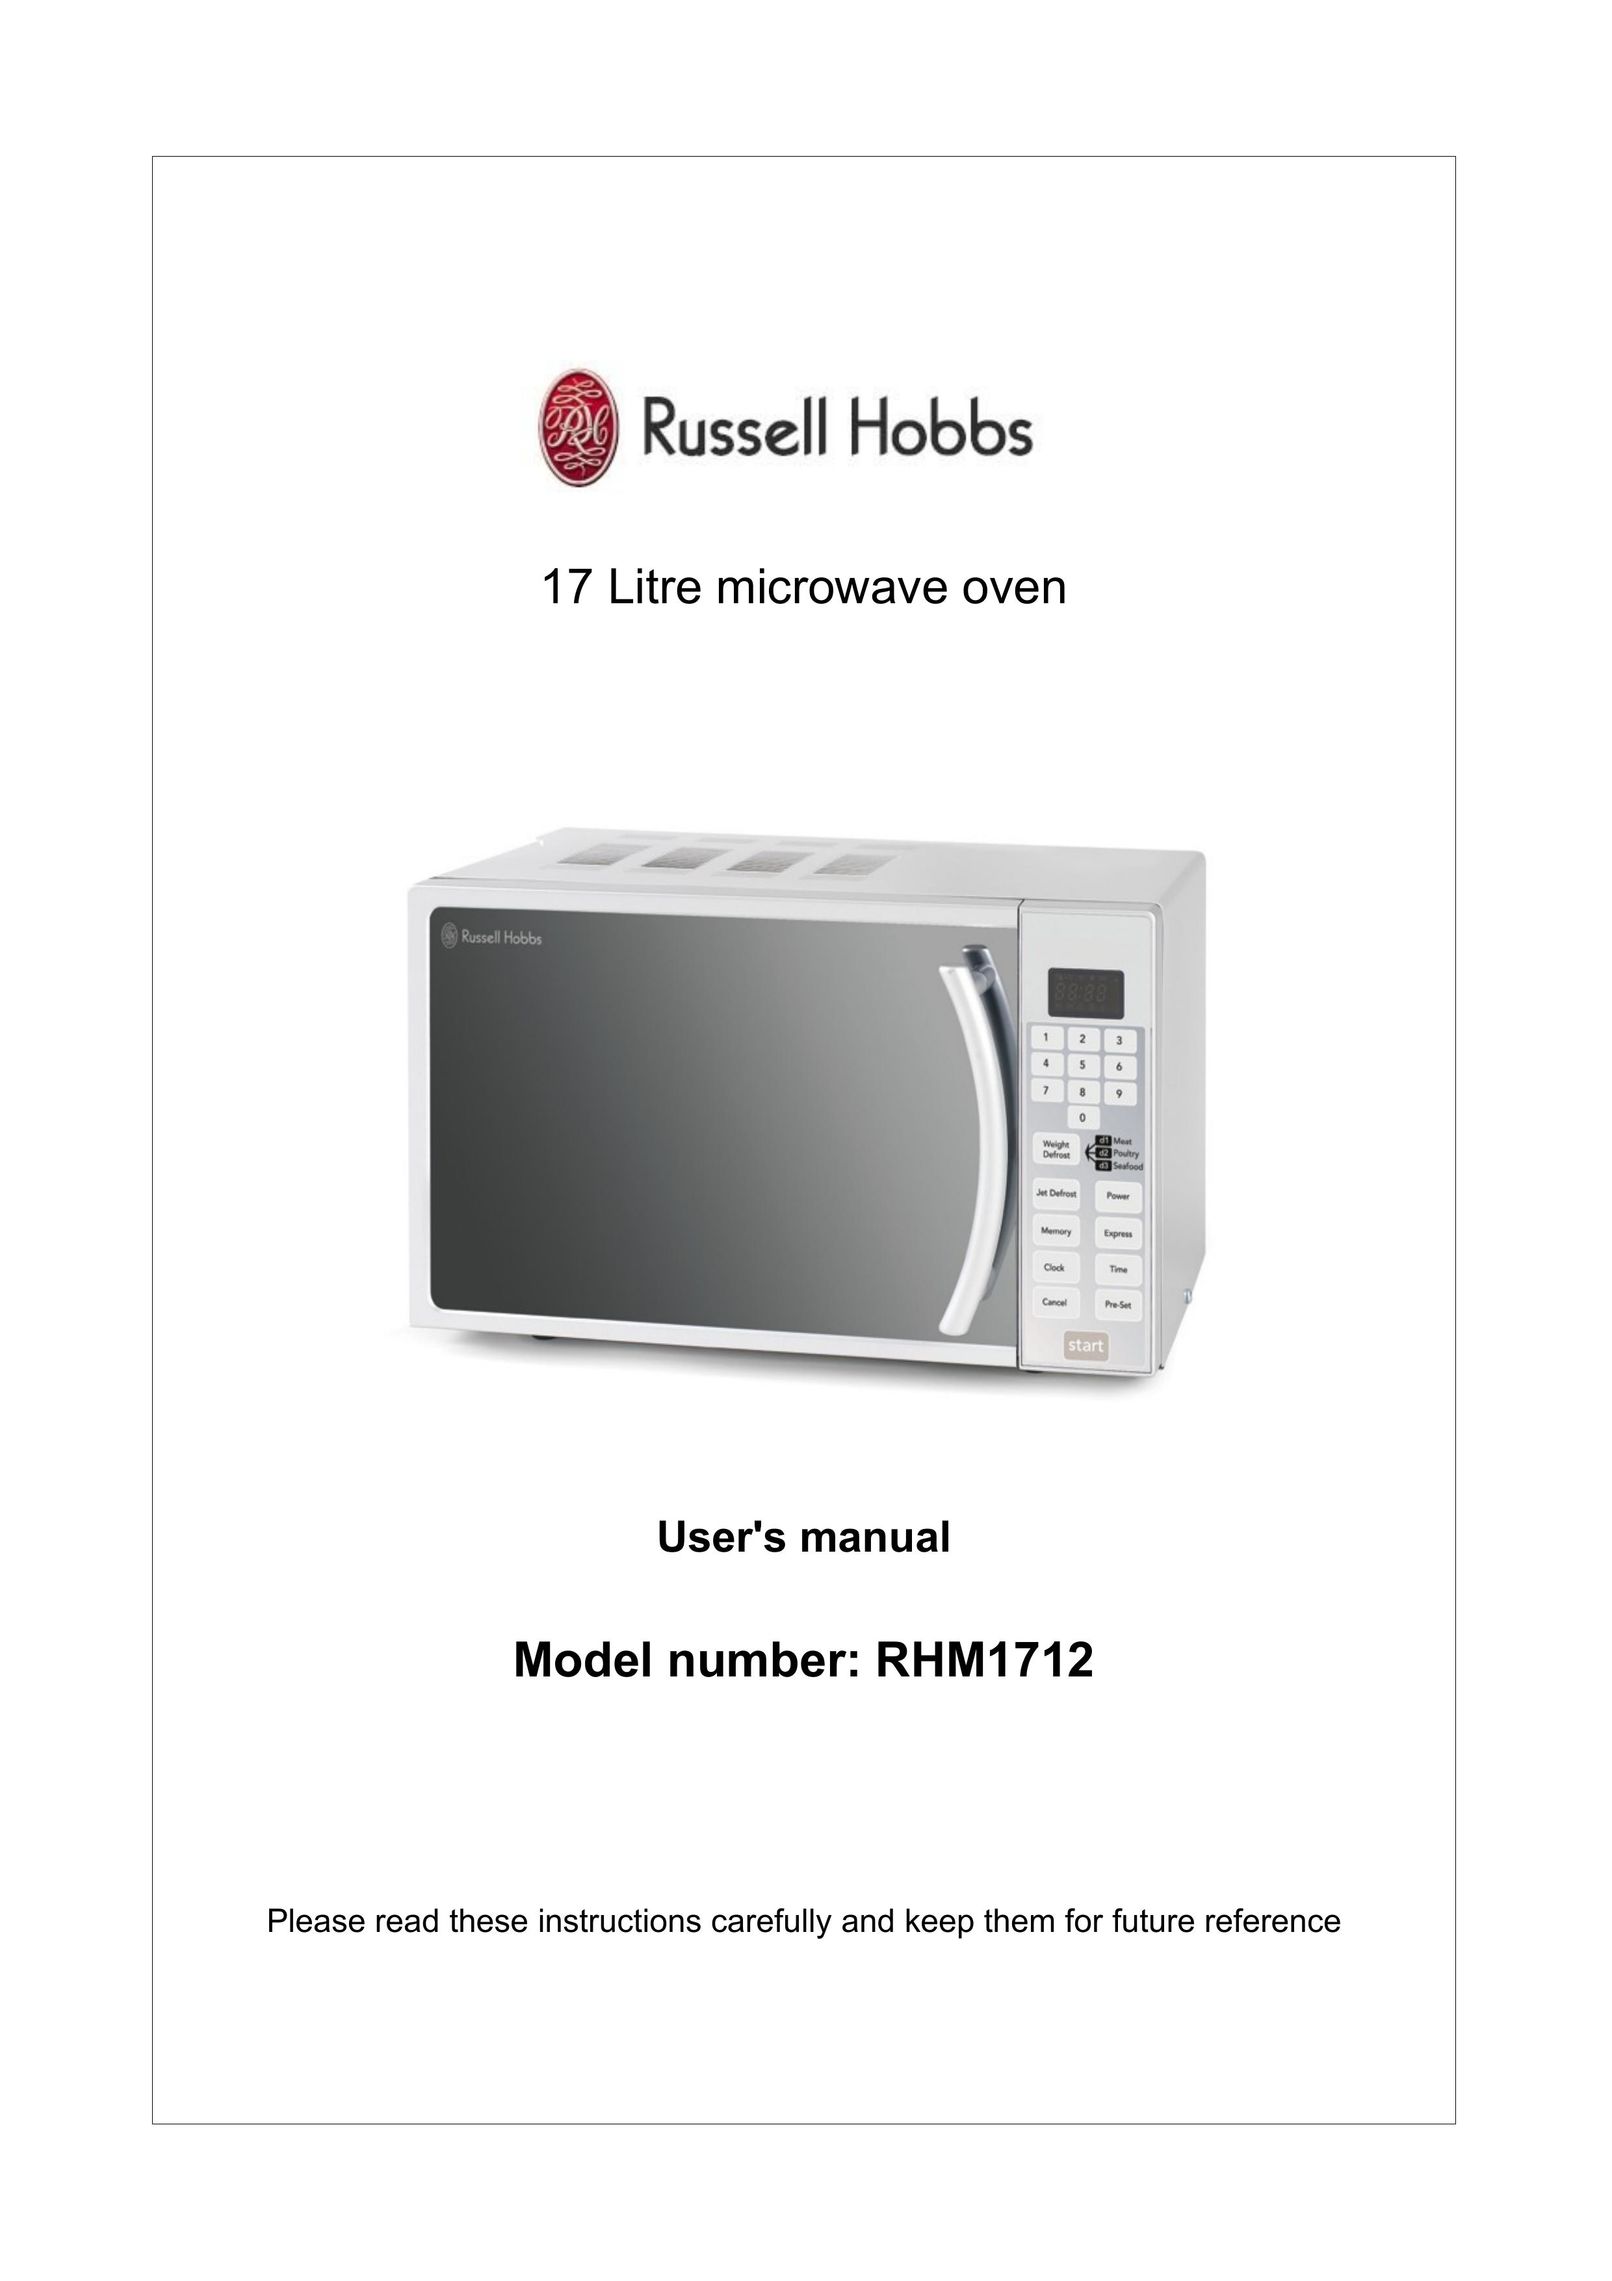 Russell Hobbs RHM1712 Microwave Oven User Manual